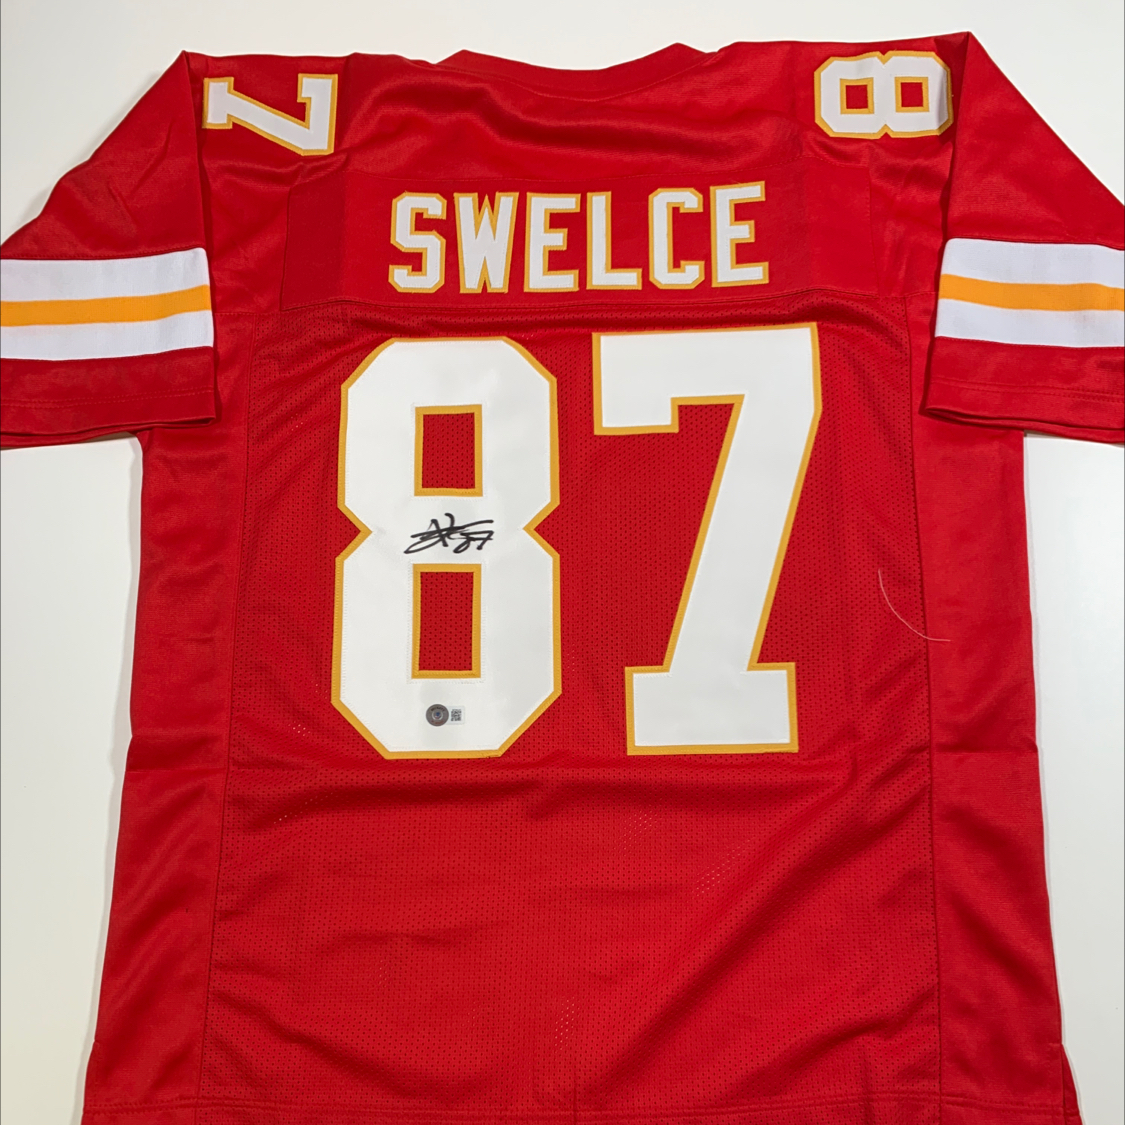 Travis Kelce "Swelce" autographed jersey